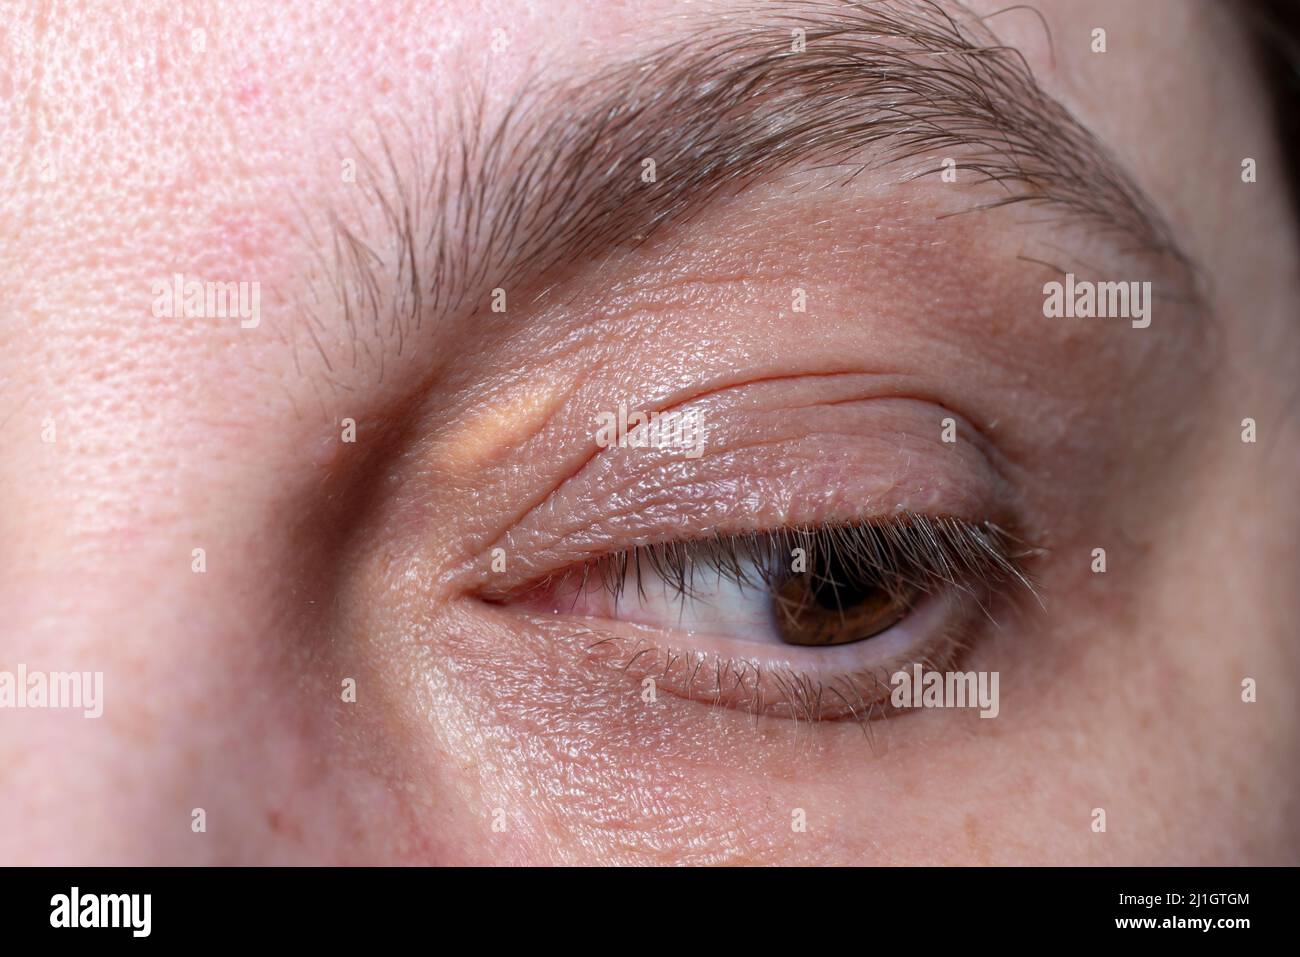 Xanthelasma,  elevated yellowish growth on the eyelids, macro shot Stock Photo